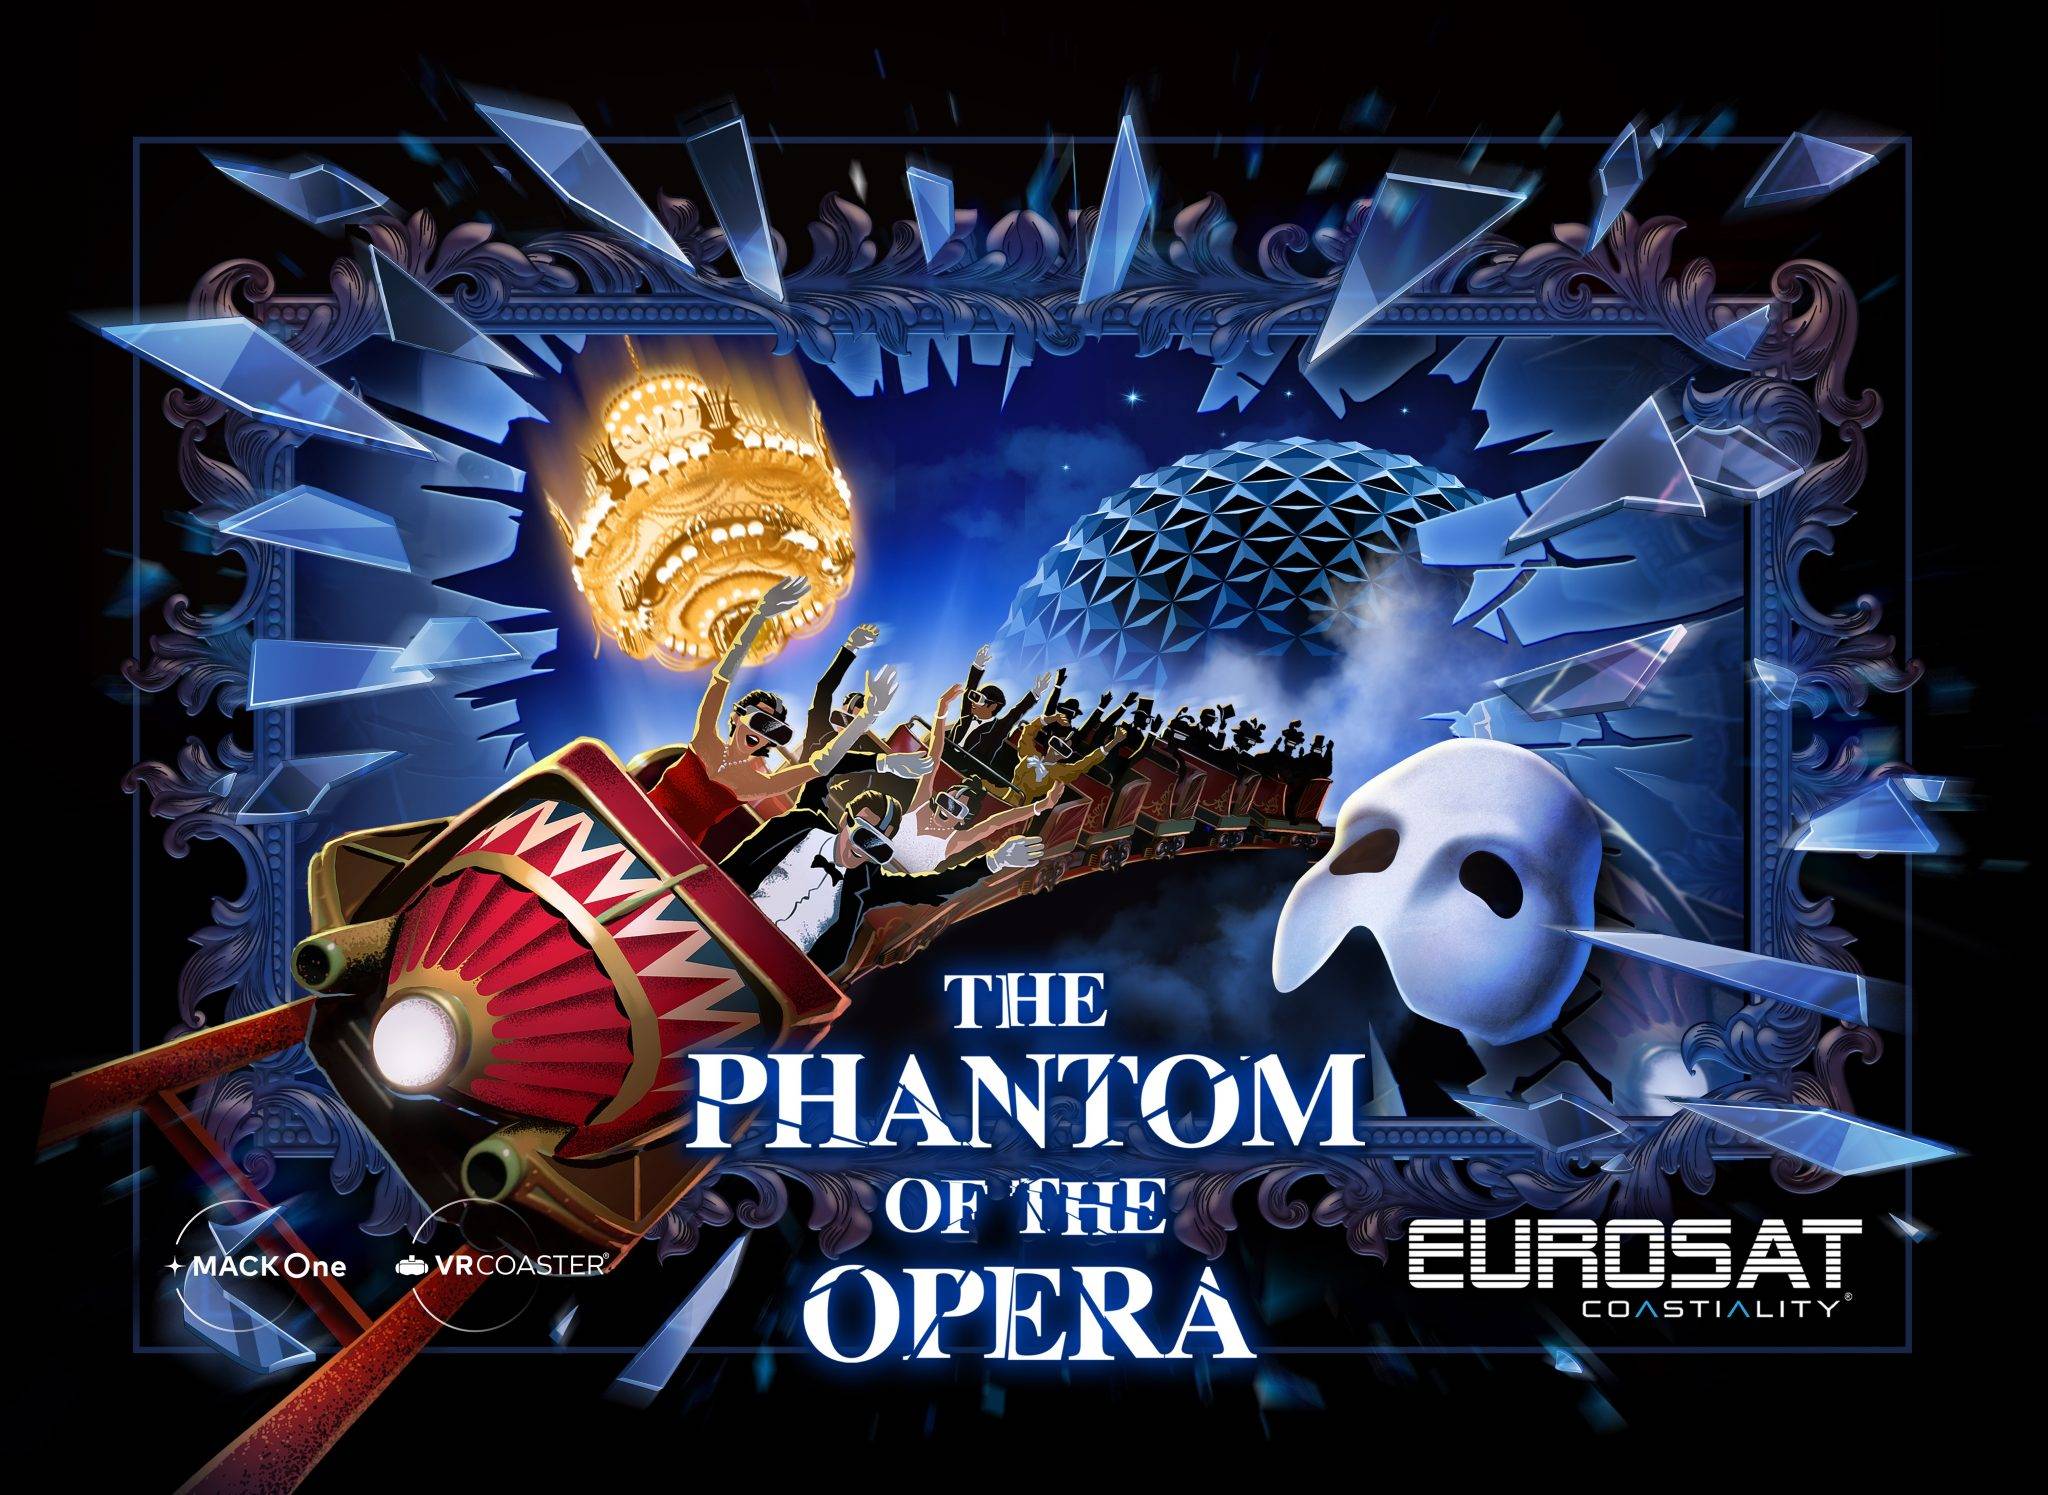 Eurosat Coastiality - Le Fantôme de l’Opéra